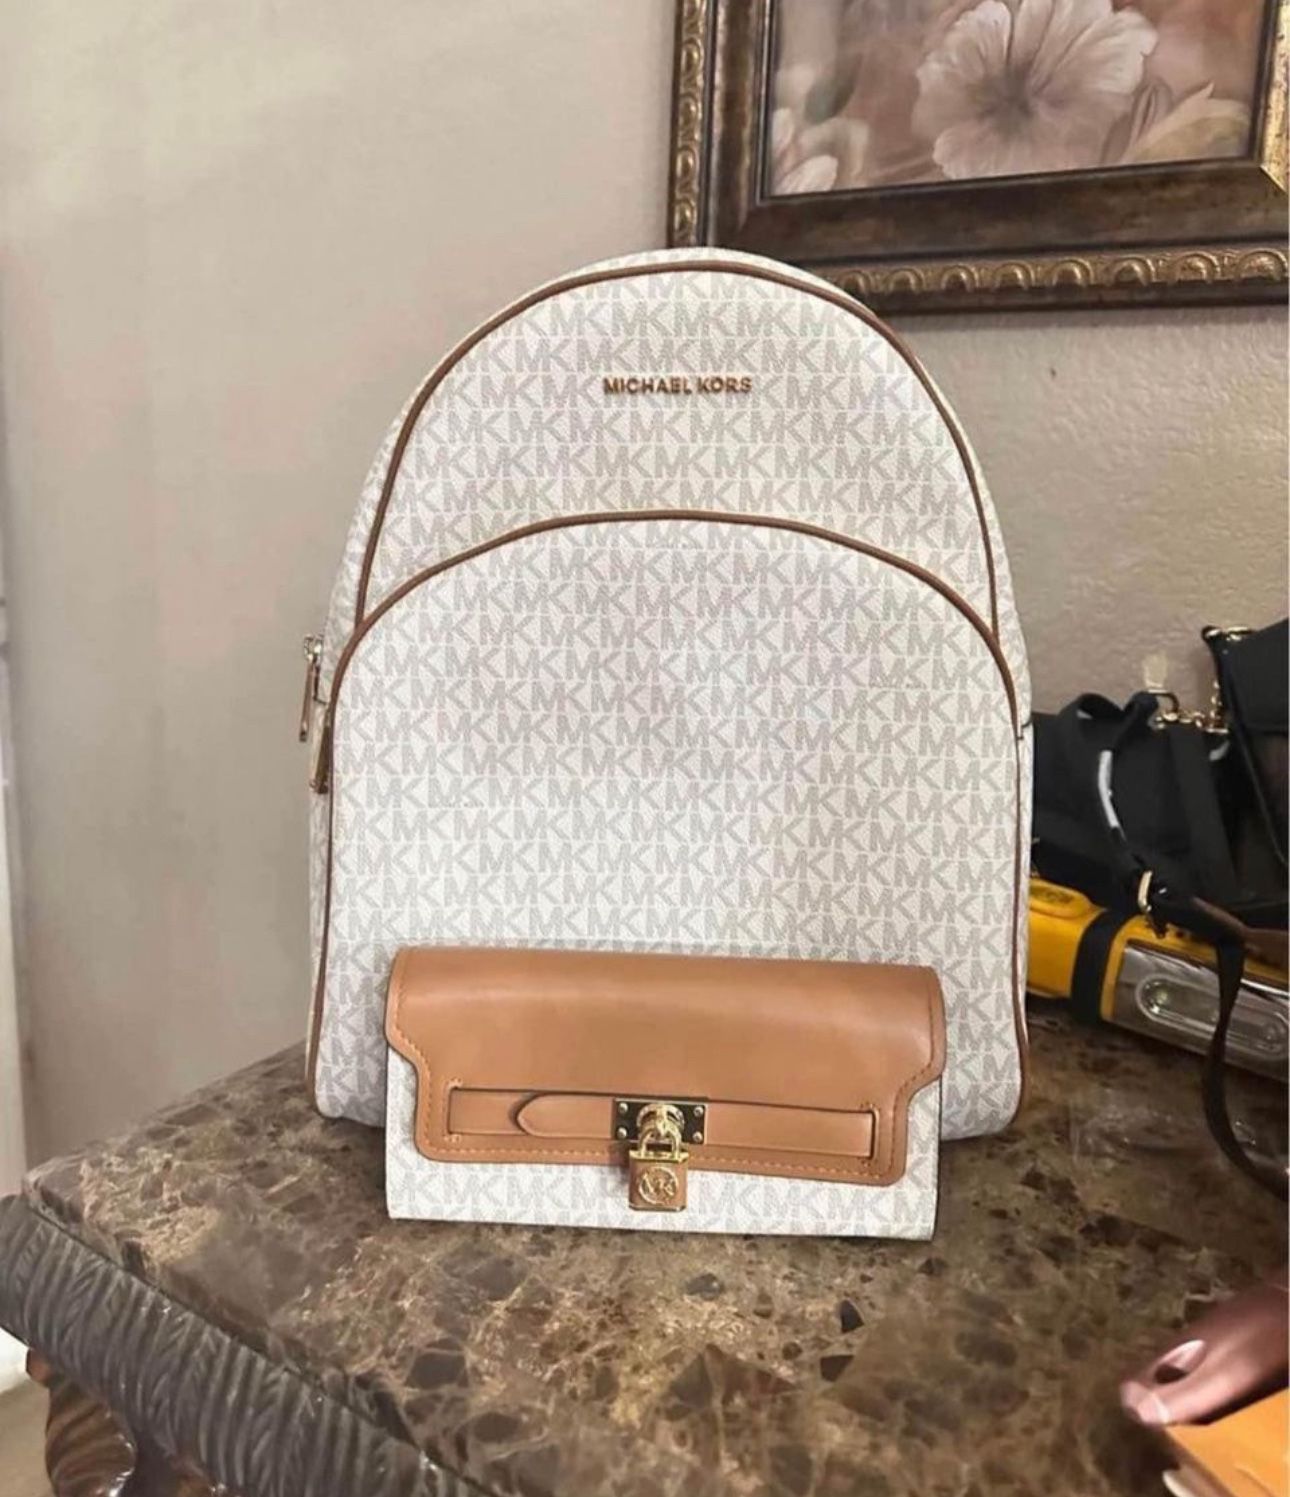 Michael Kors Backpack & Wallet 